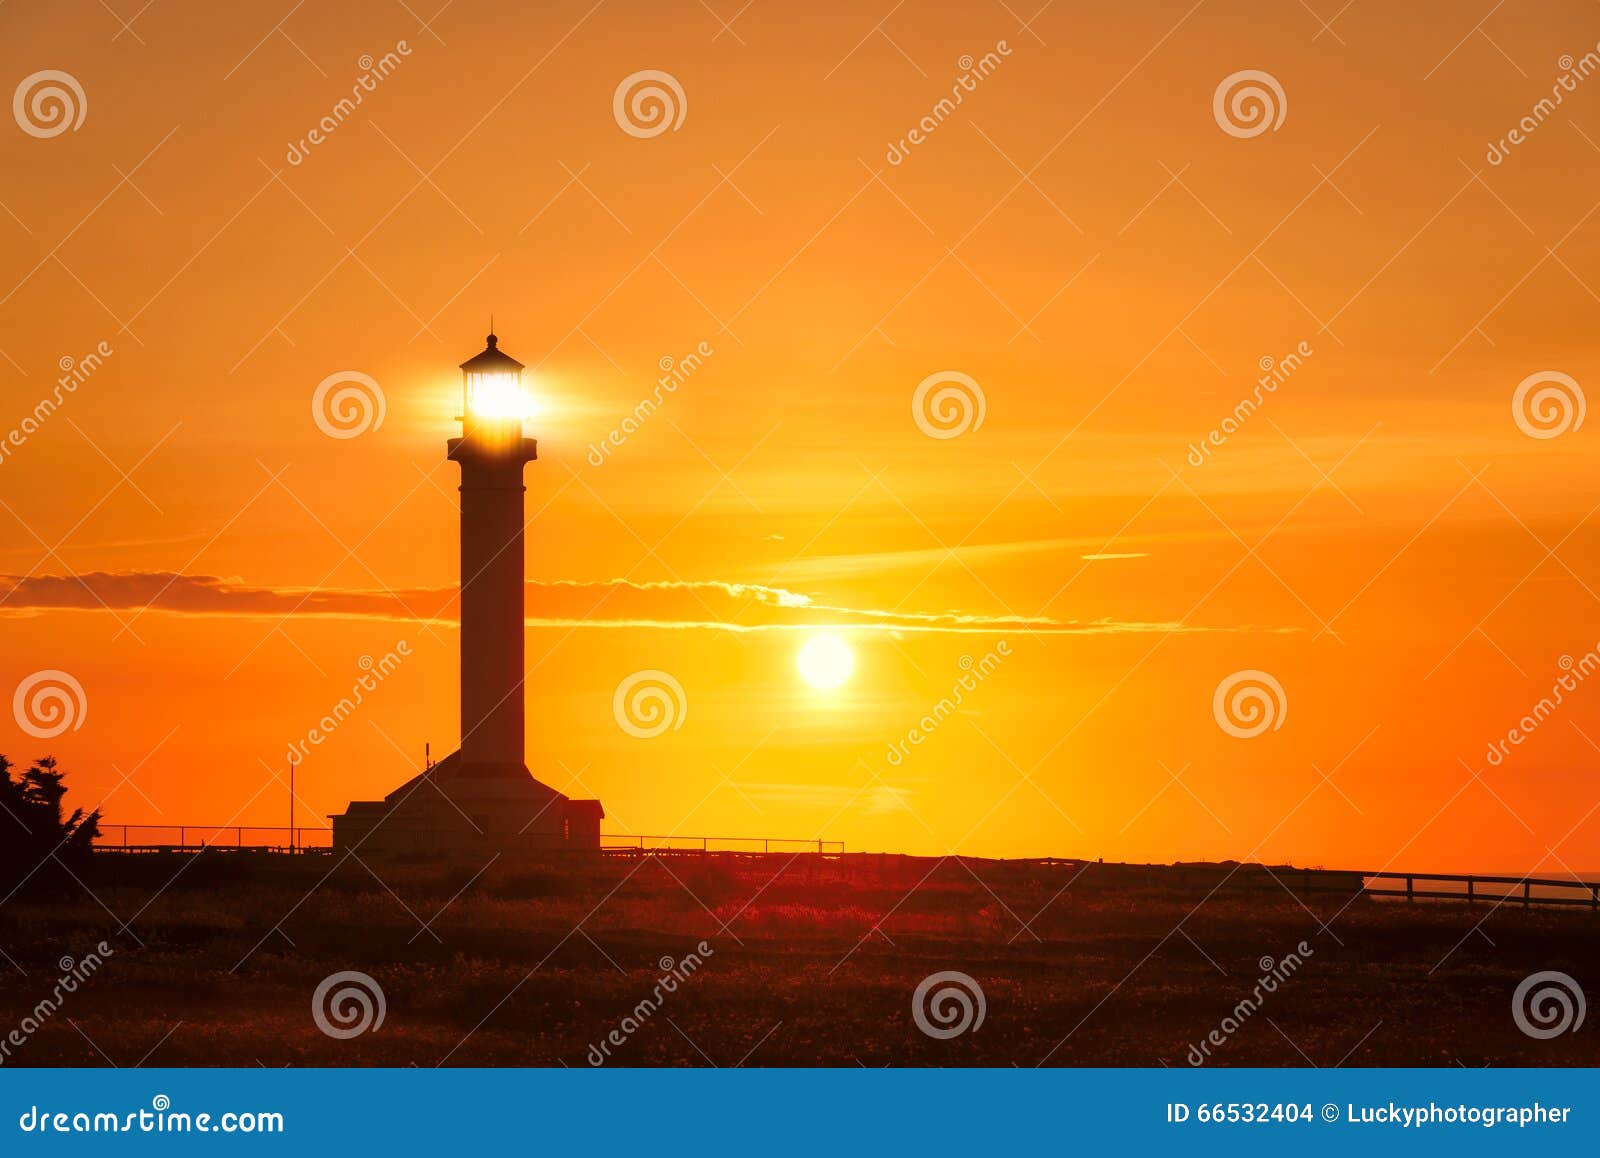 Lighthouse Searchlight Beam At Sunset Stock Photo - Image: 66532404